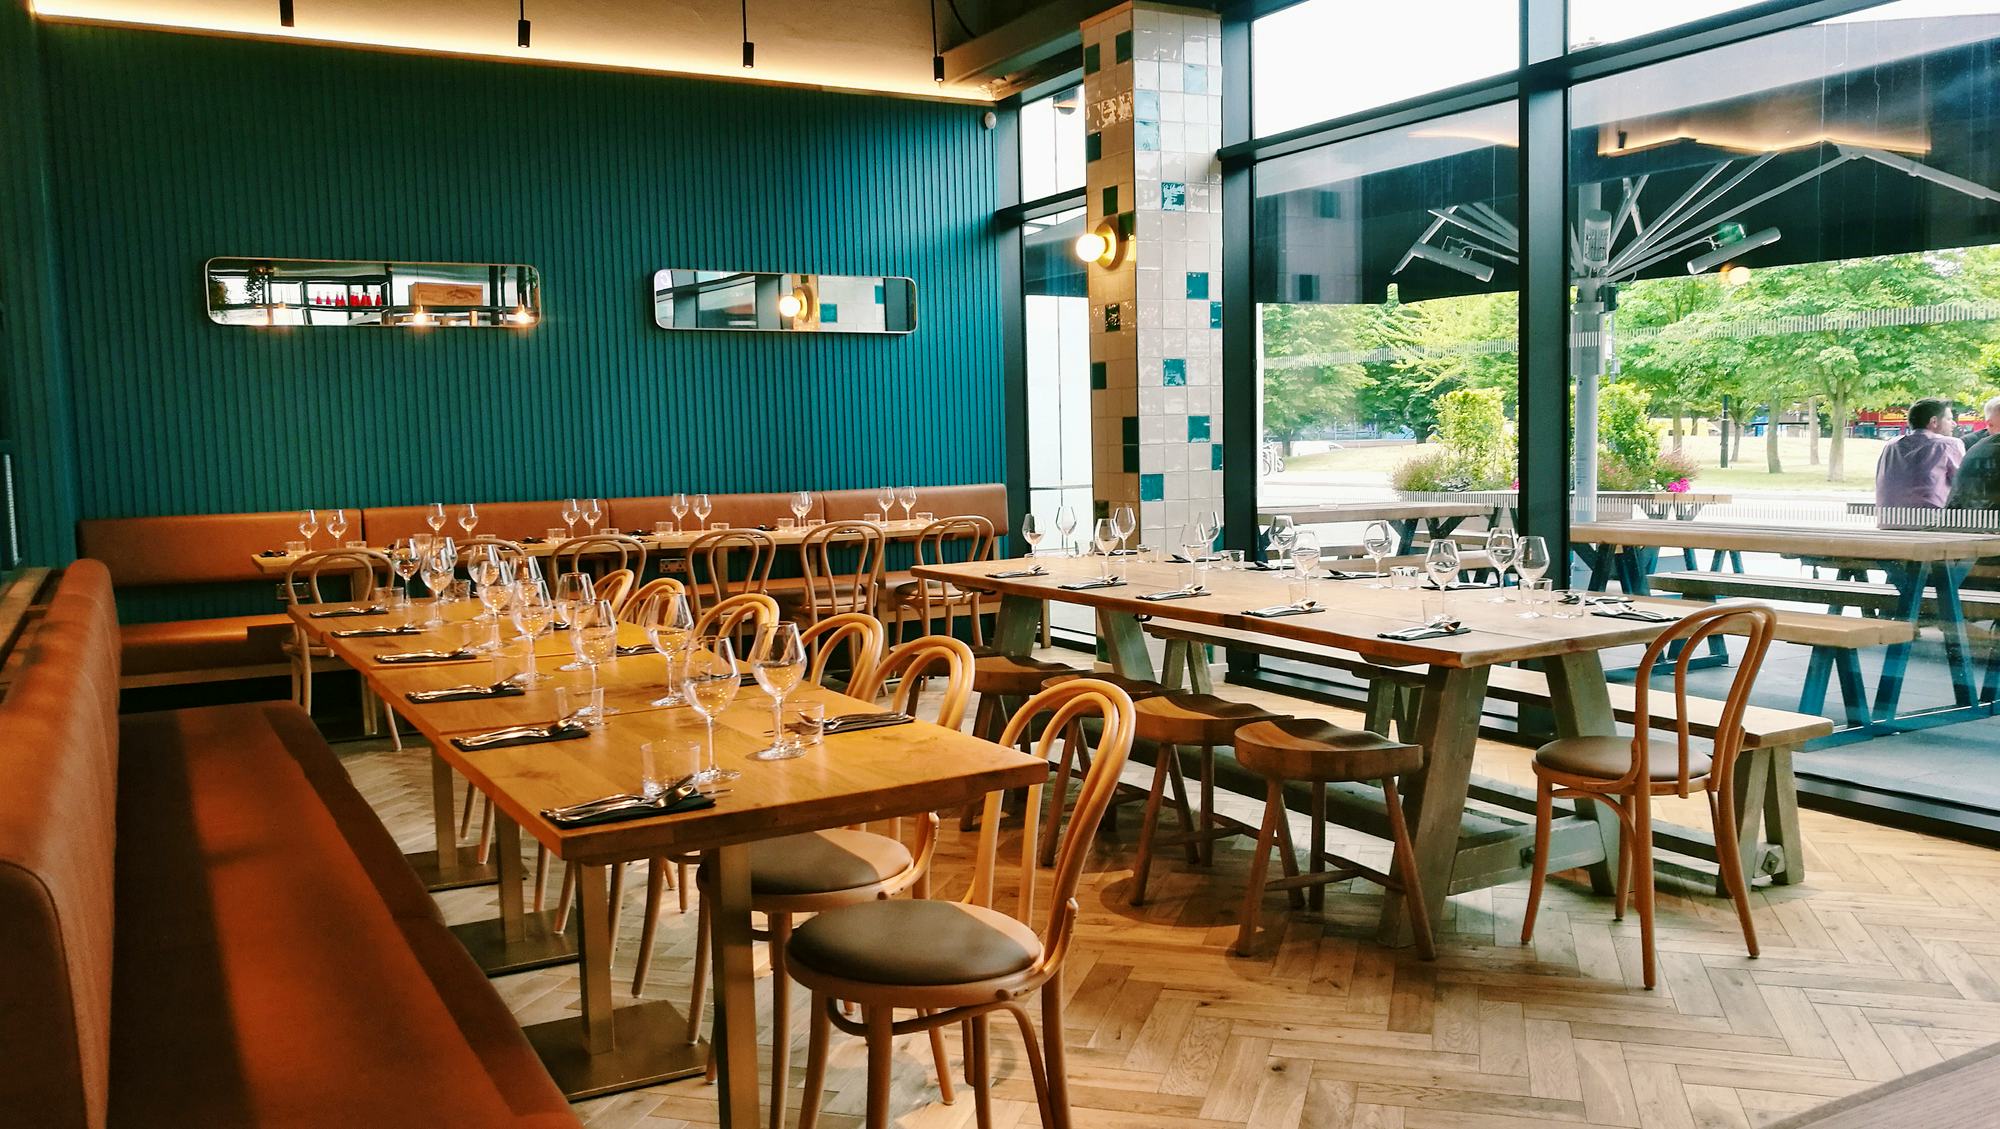 Wellbourne Brasserie london restaurants private hire events light bright modern venues